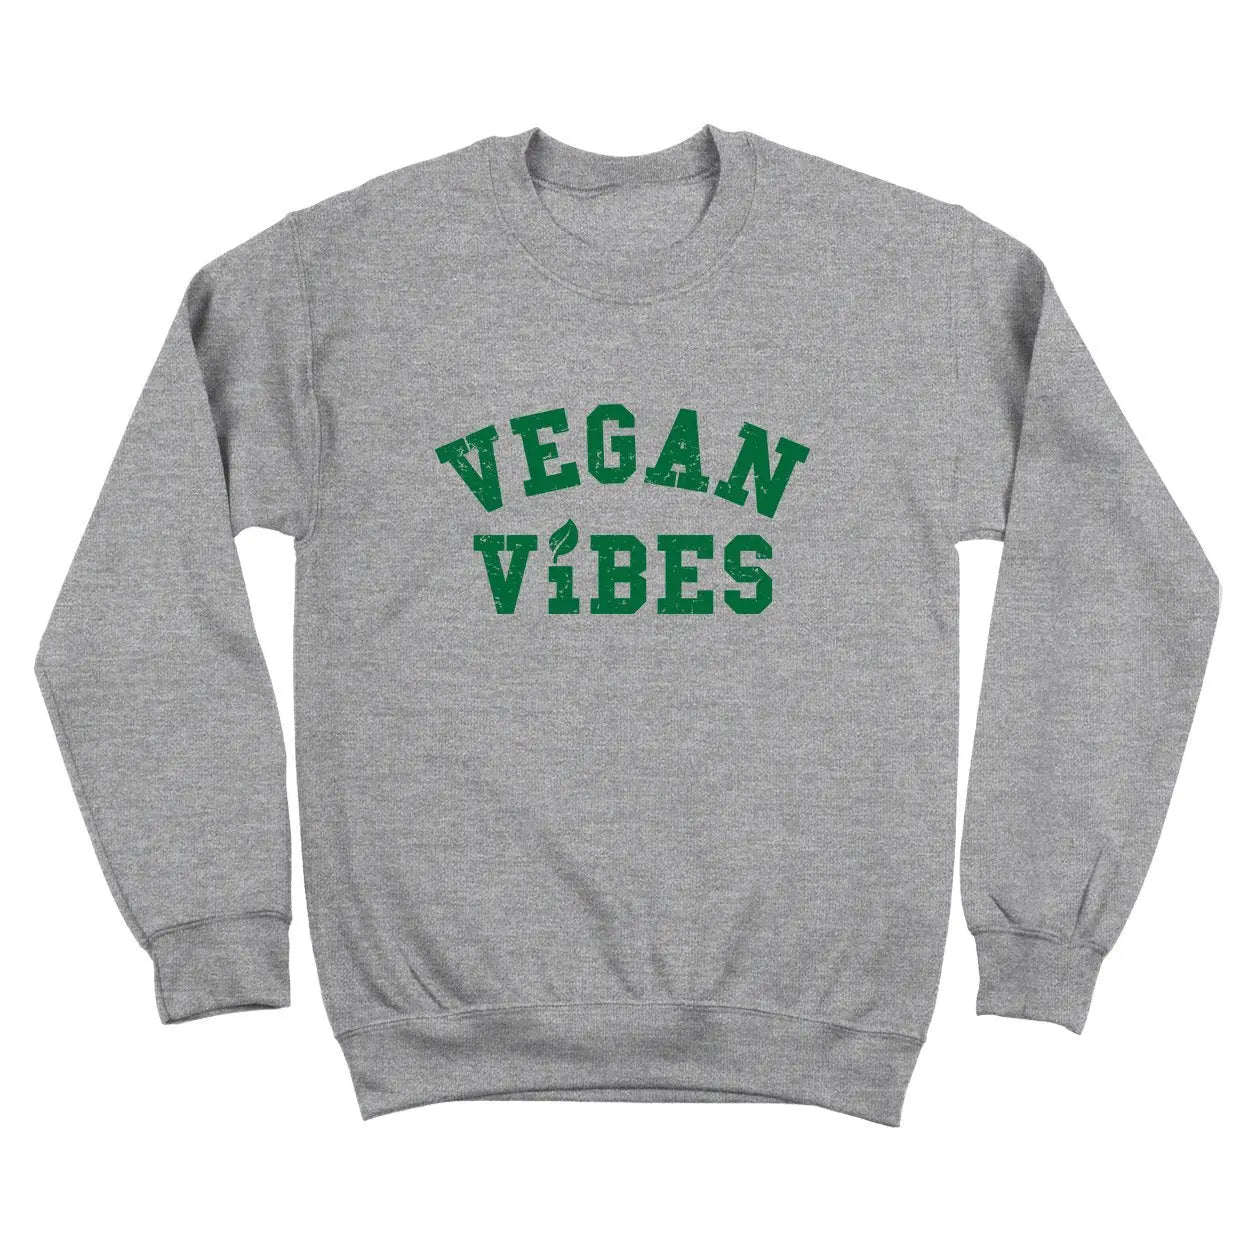 Vegan Vibes Tshirt - Donkey Tees